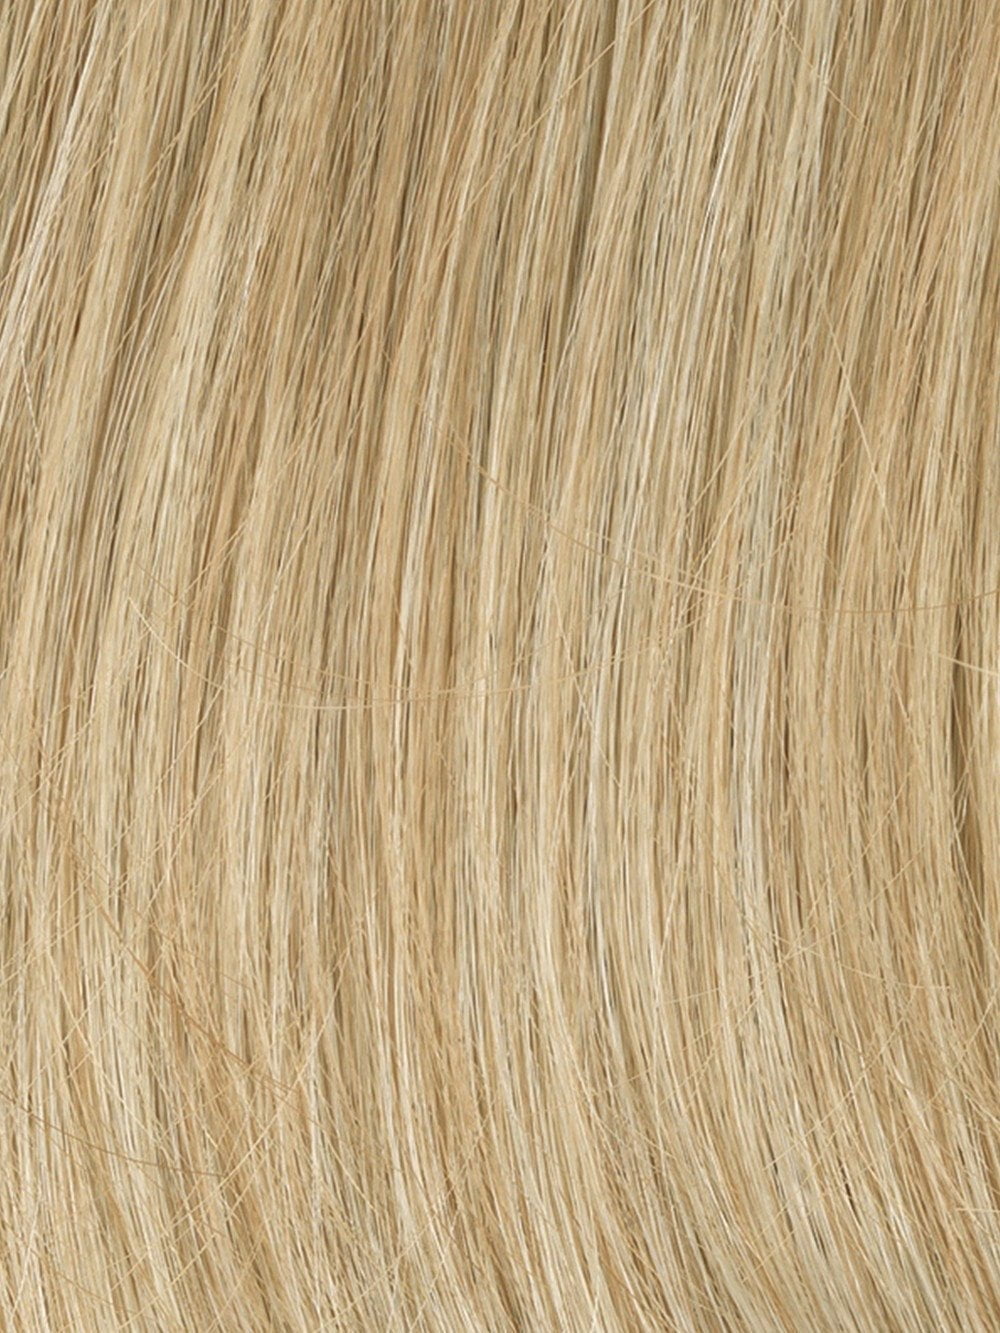 Platinum Blonde | Lightest or brightest blonde 